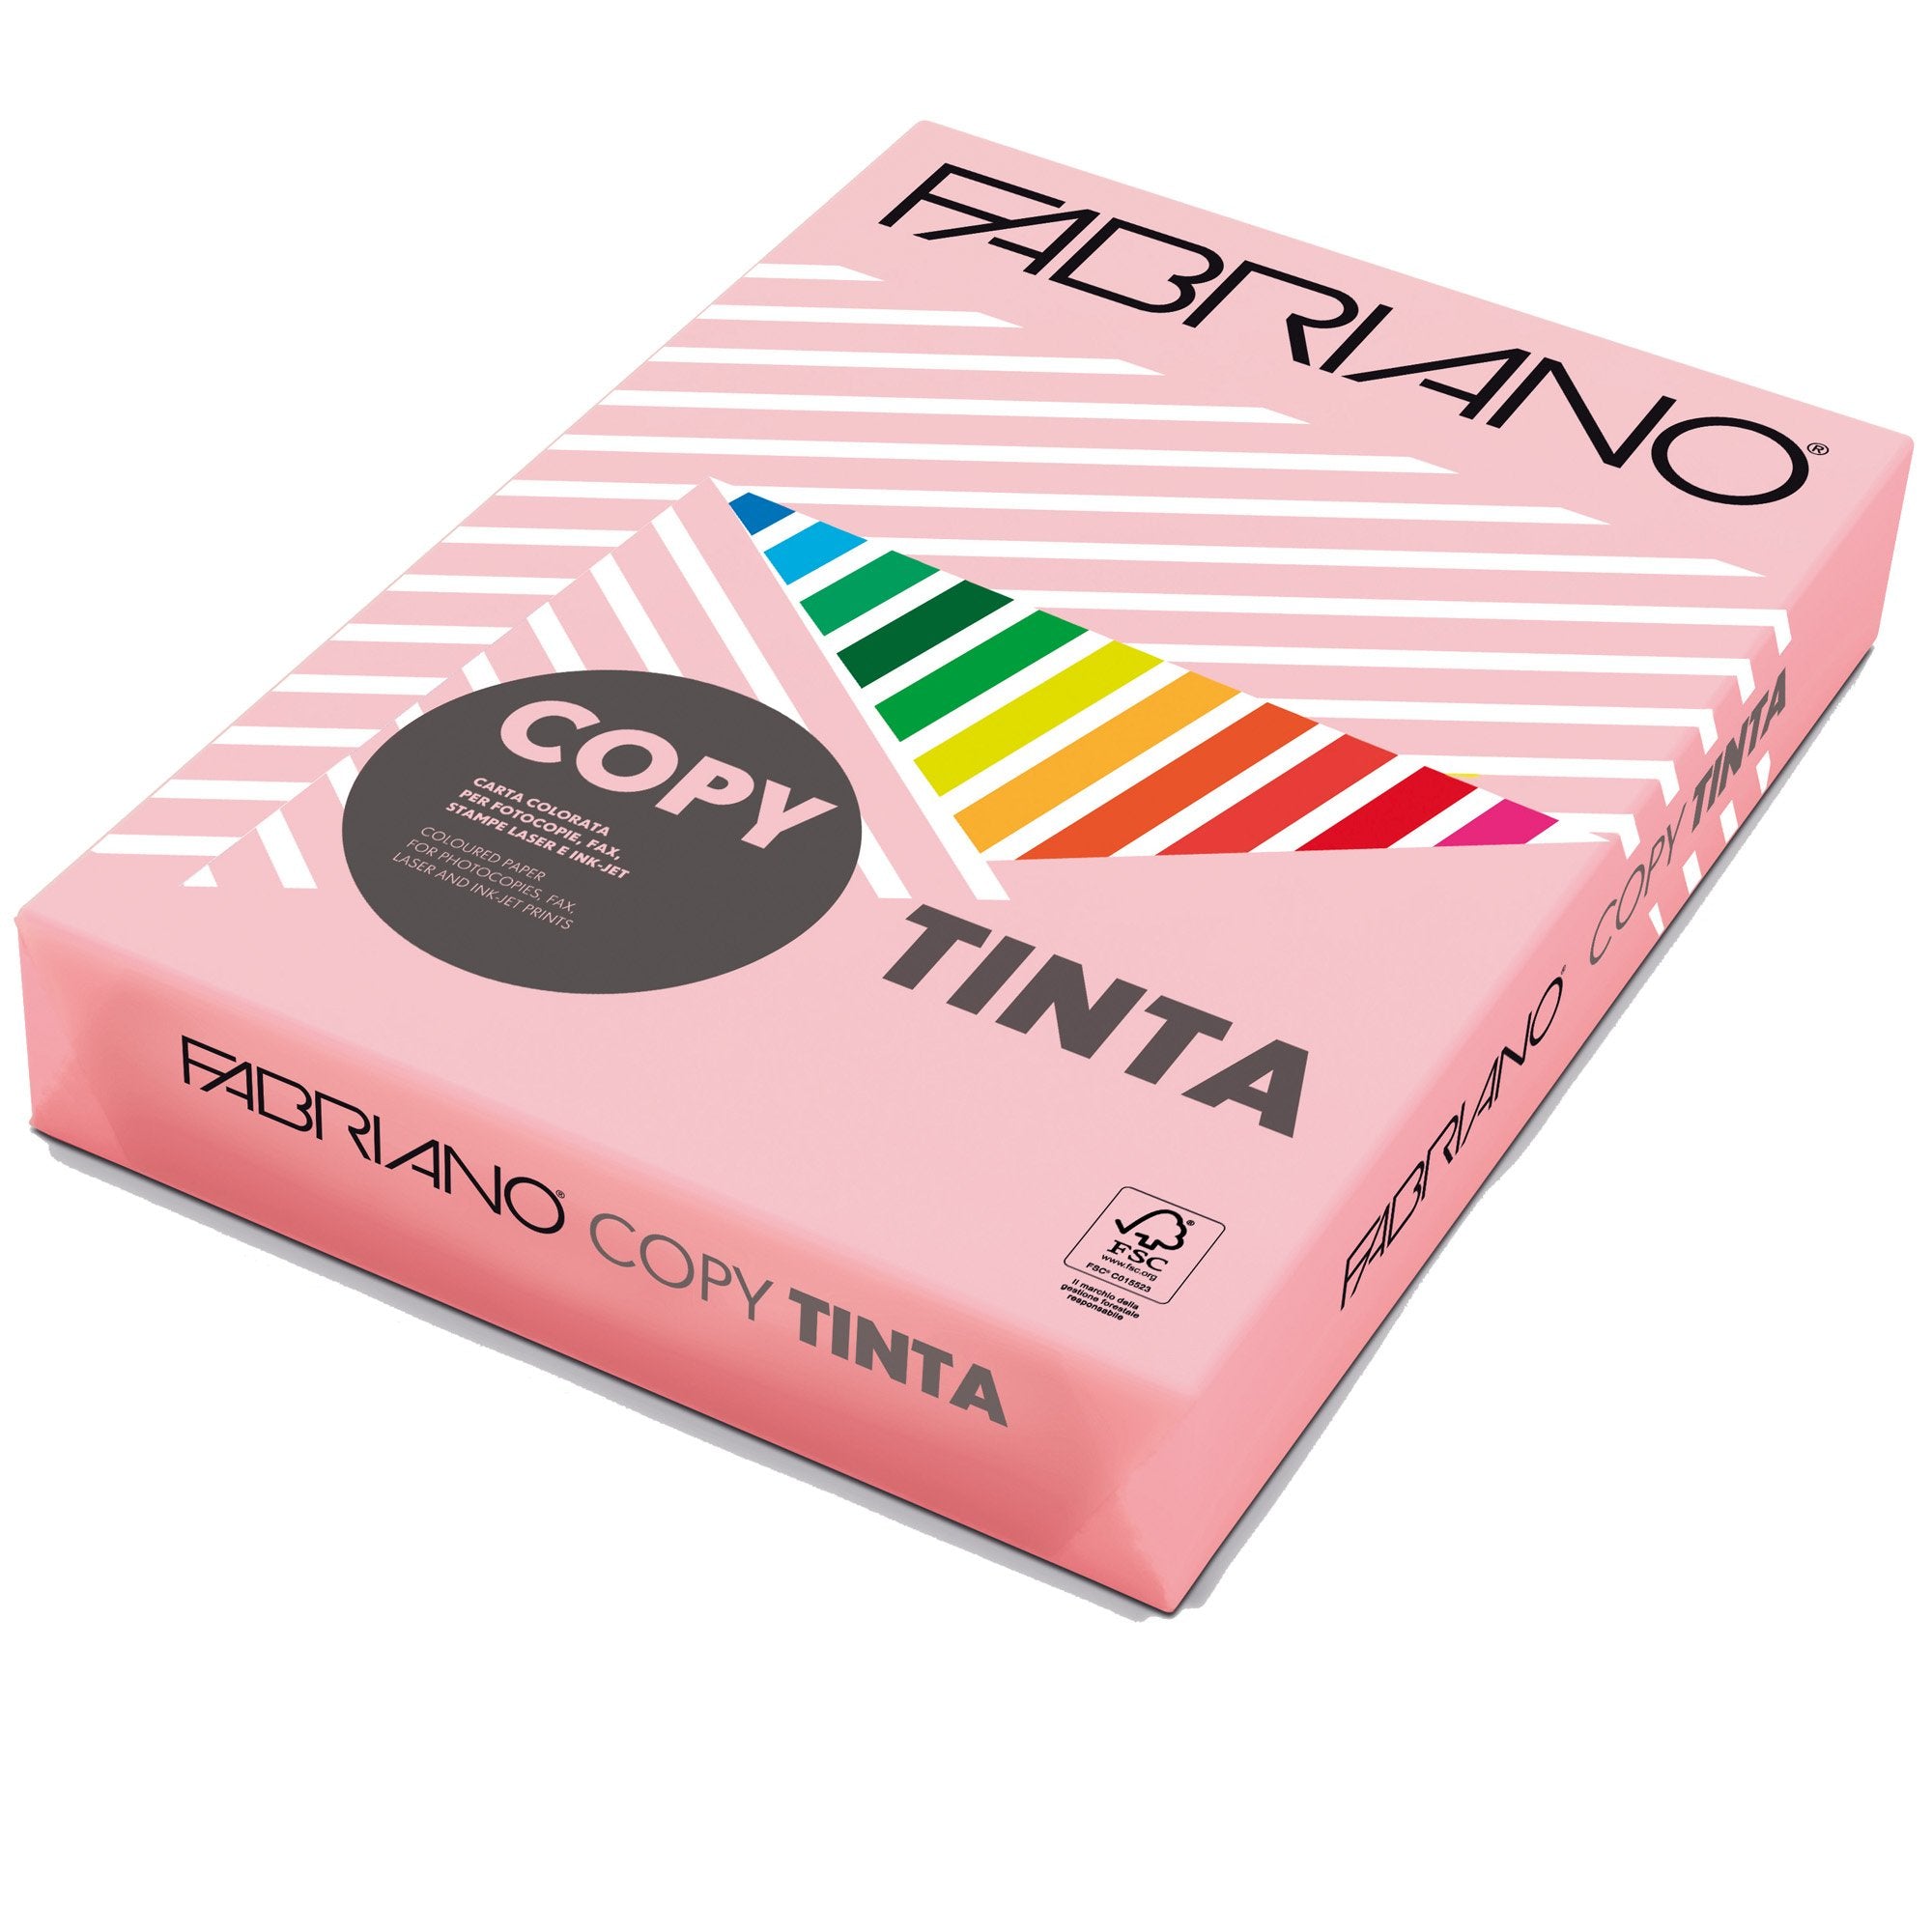 fabriano-carta-copy-tinta-a4-160gr-250fg-col-tenui-rosa-cipria